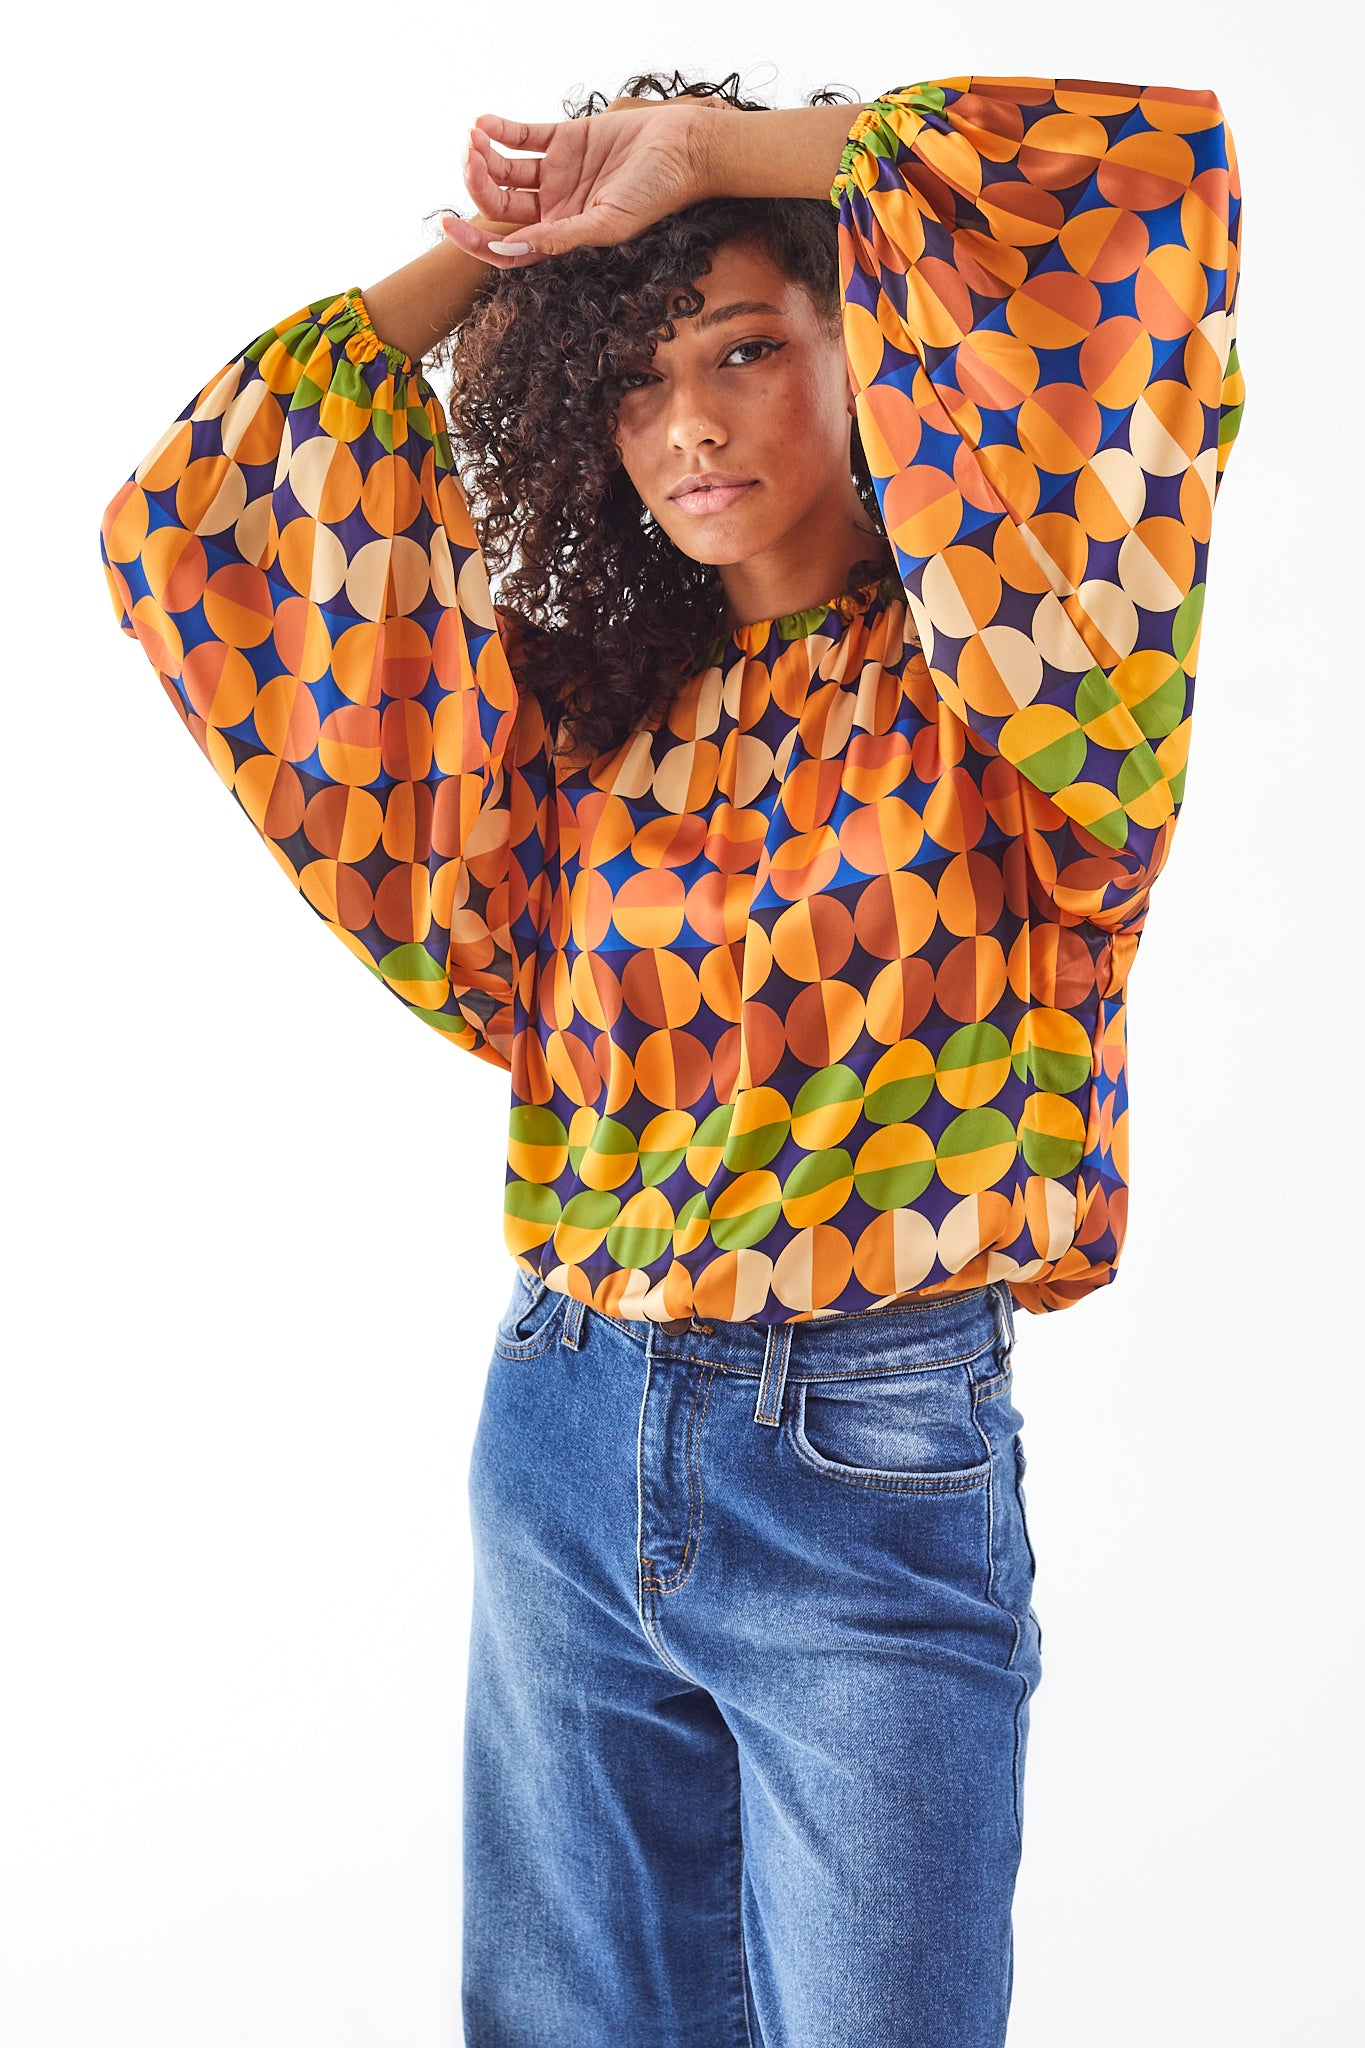 orange print Printed Up in Geometric Top blouse womens clothing